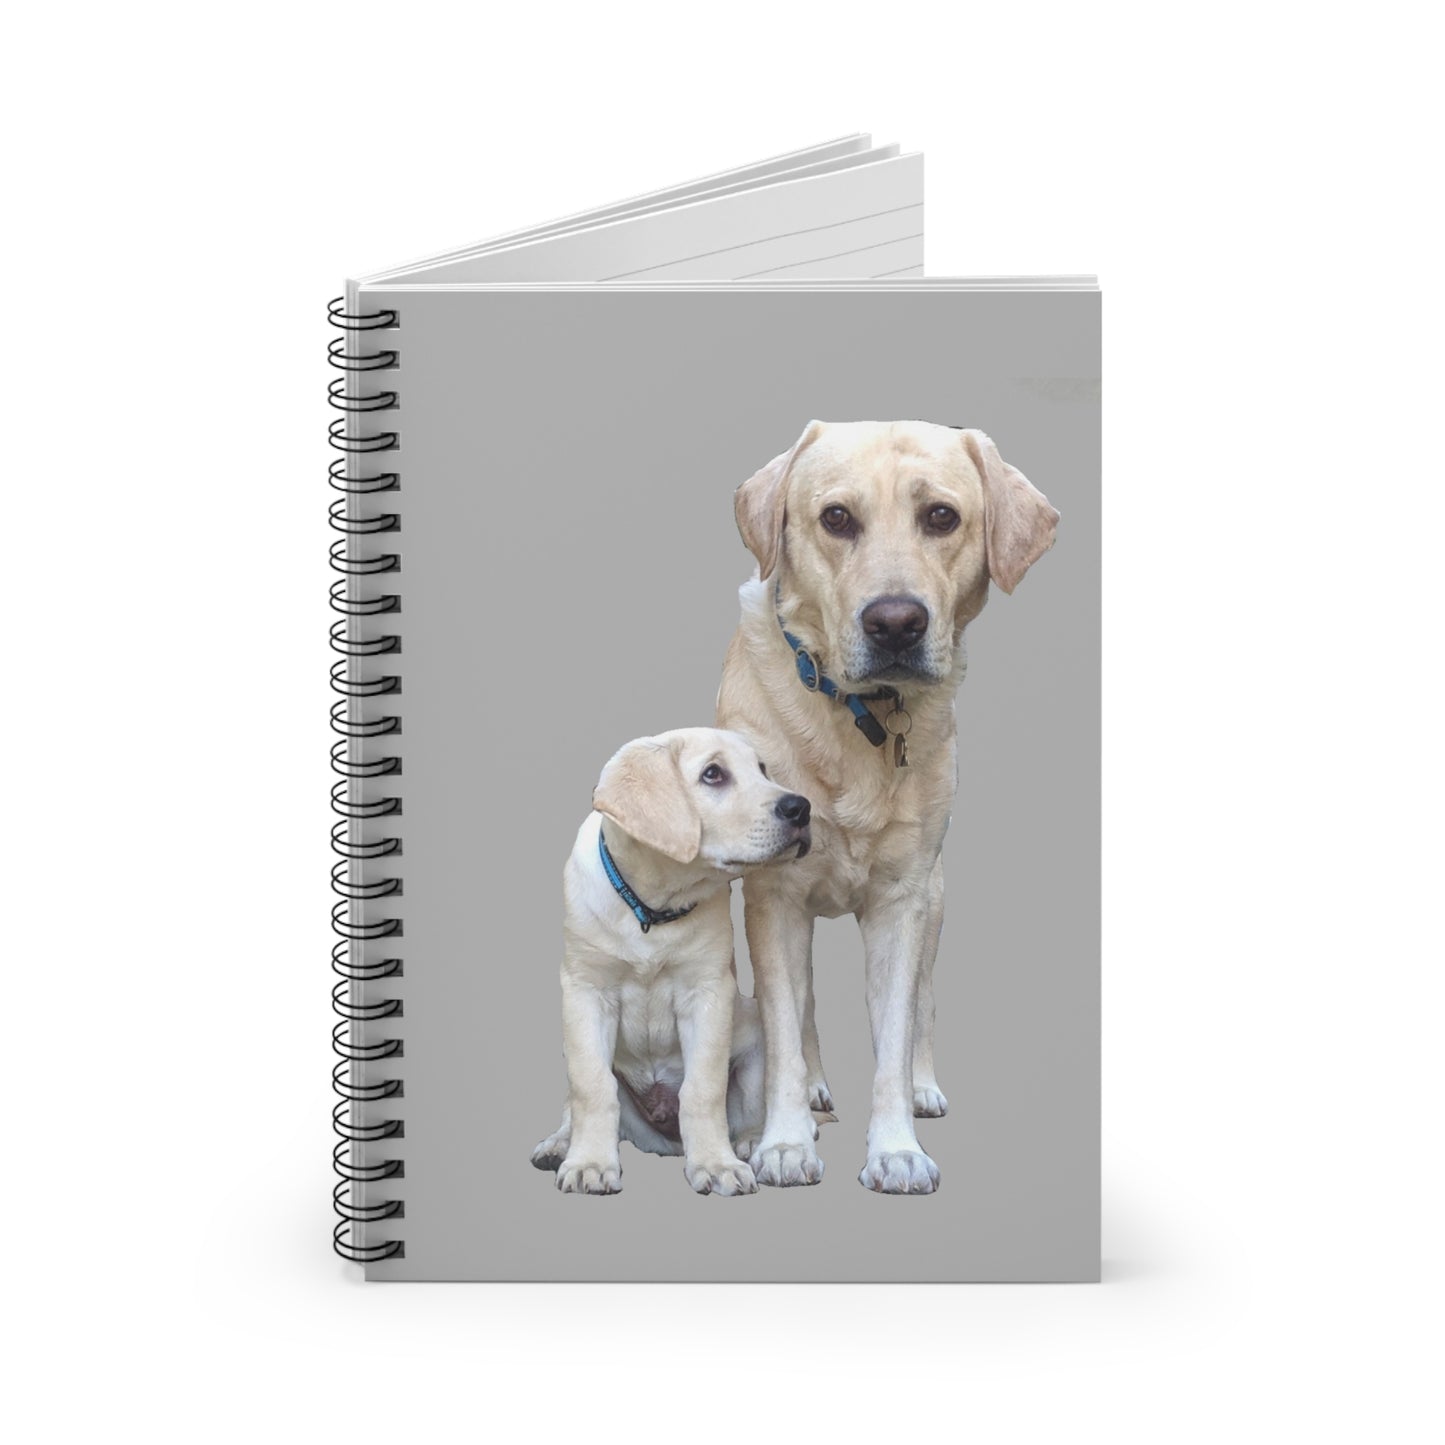 Dog & Pup Spiral Notebook - Ruled Line